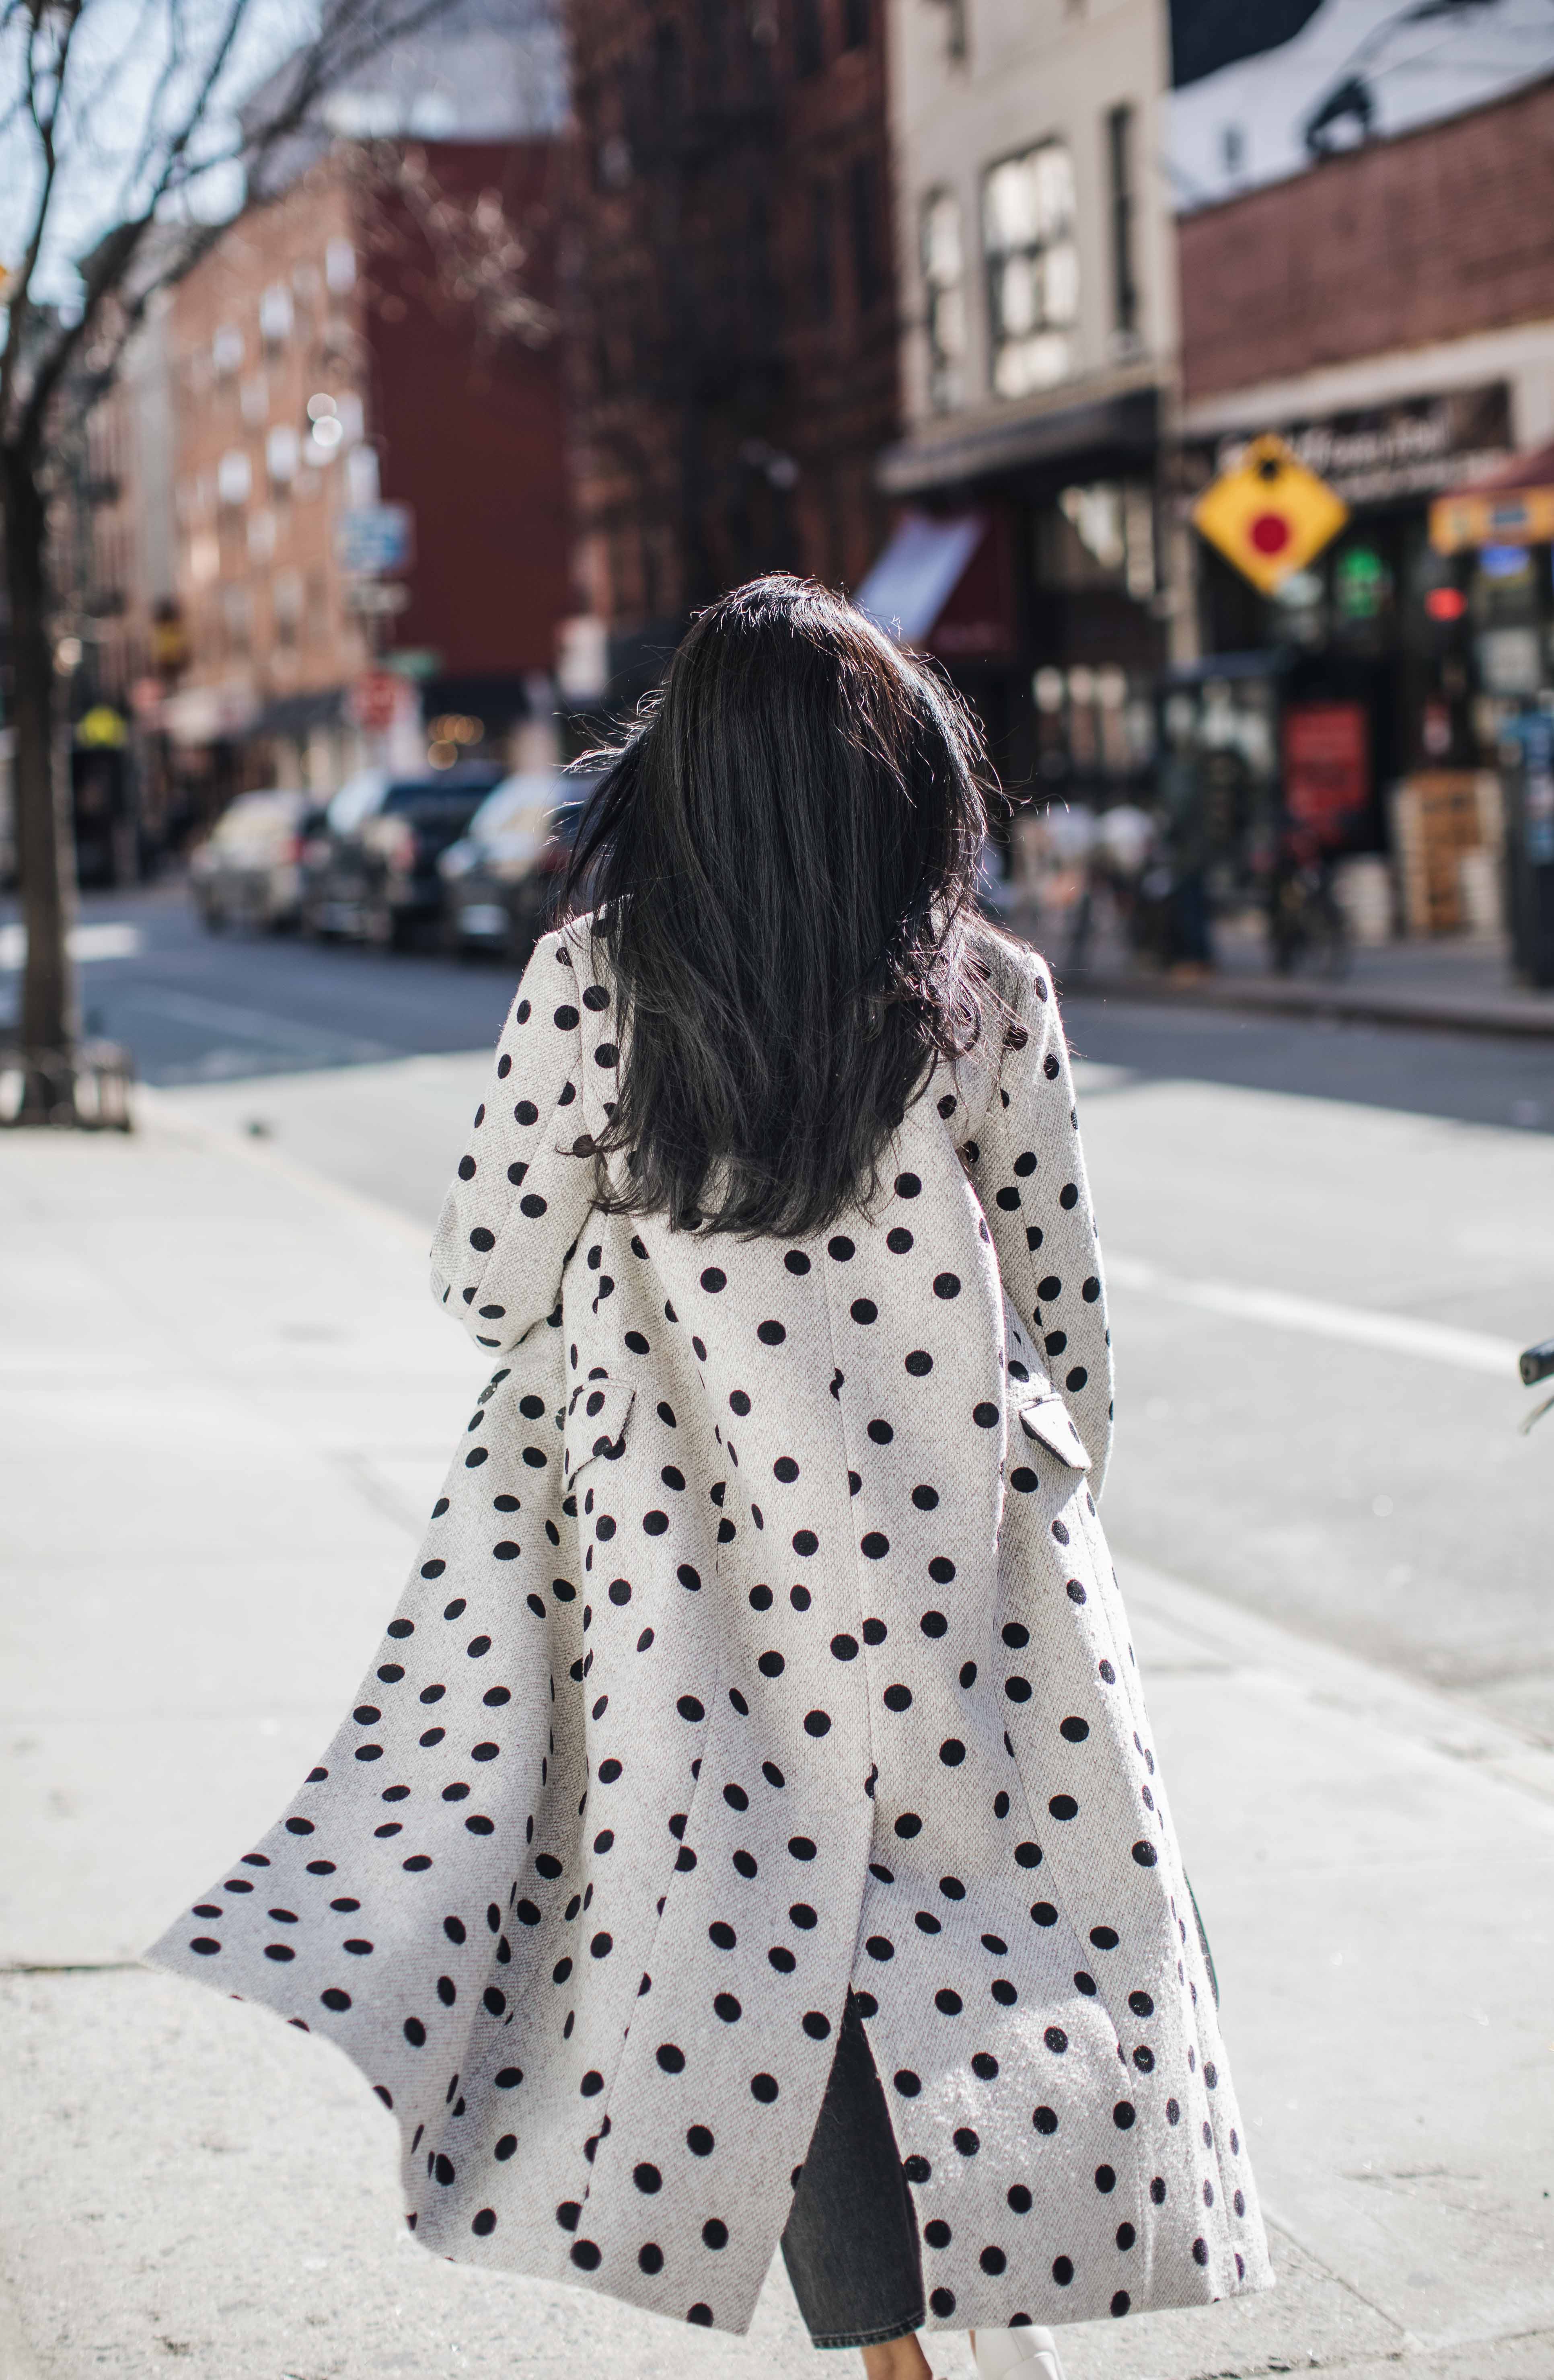 Sheryl Luke Walk In Wonderland wearing the Polka Dot Coat trend